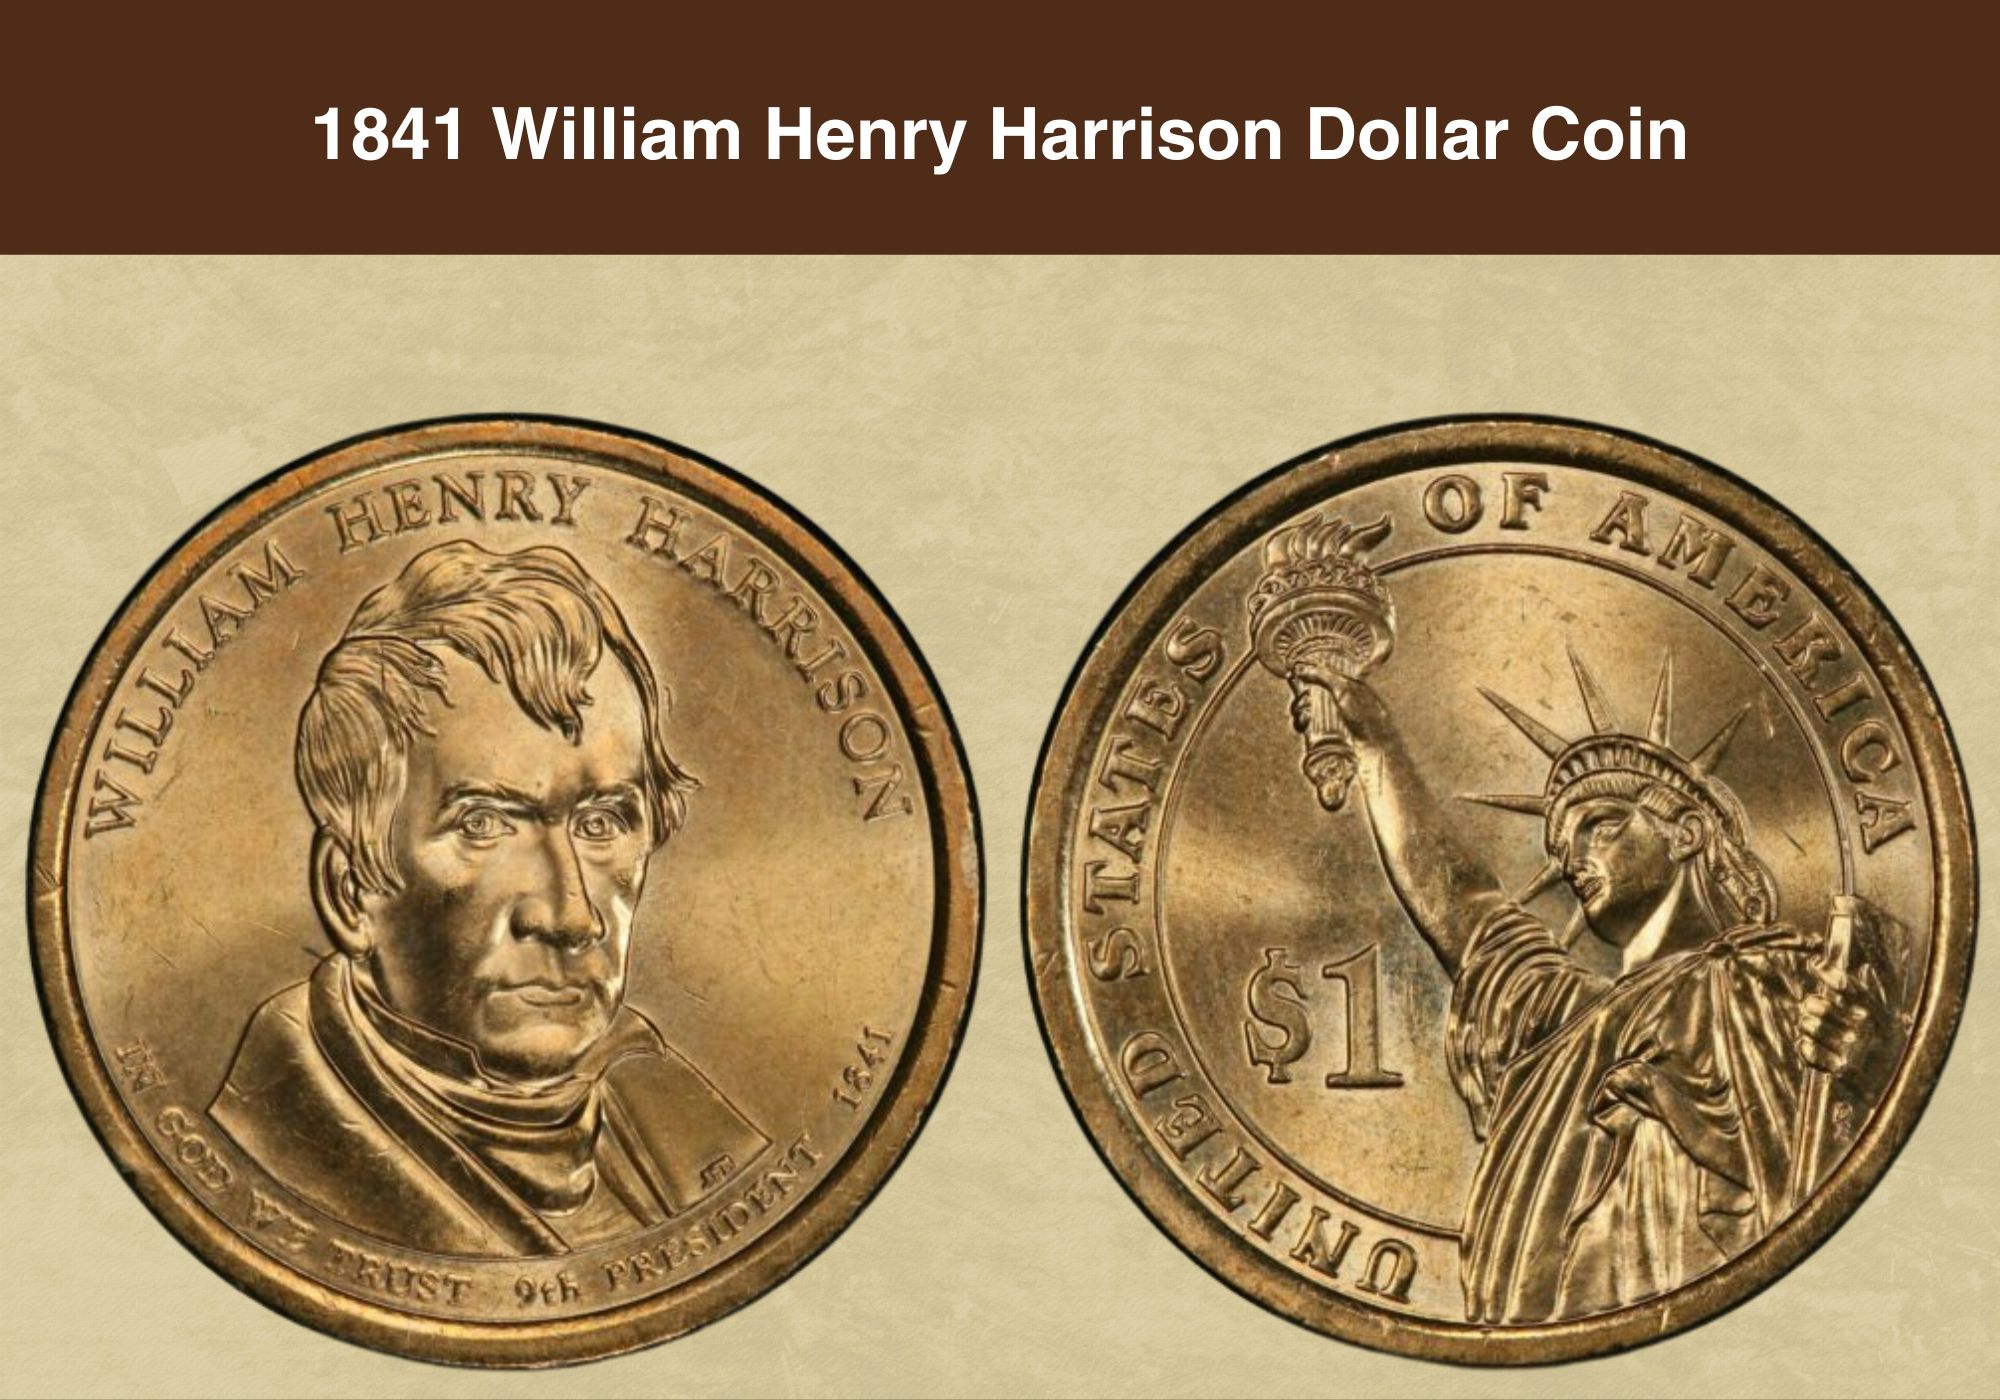 Dollar 1841 William Henry Harrison Dollar Coin Value